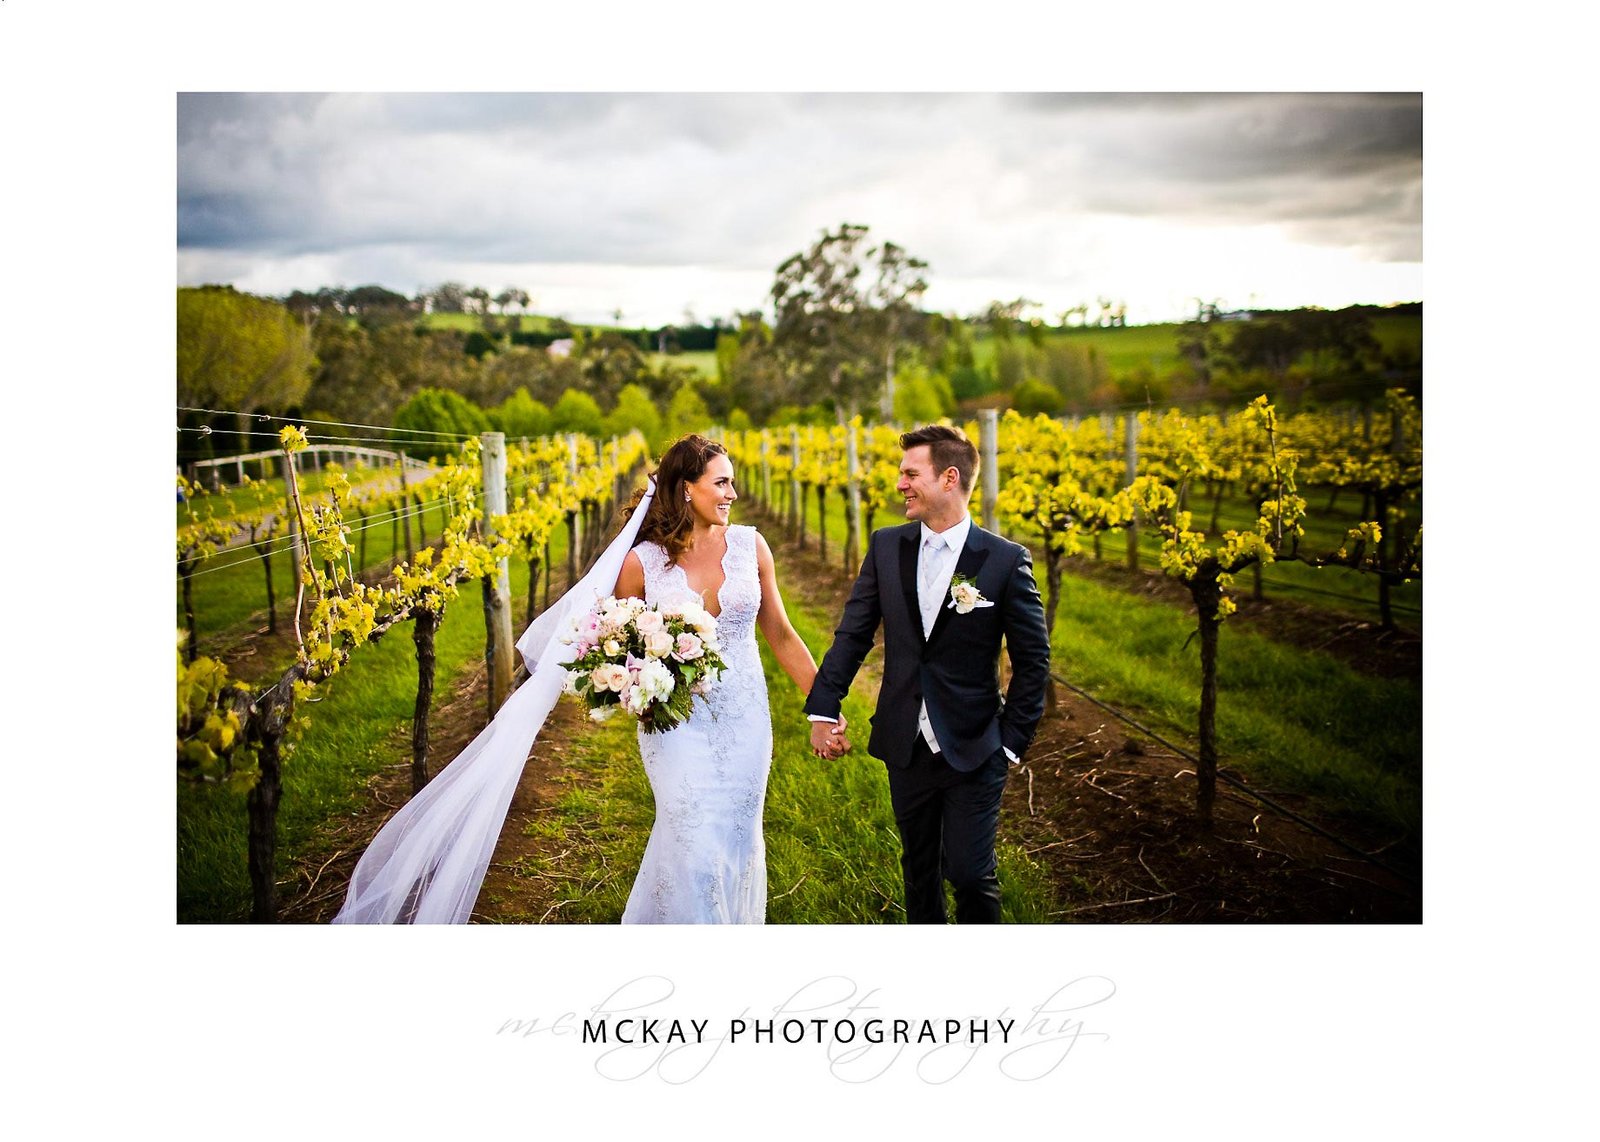 Kayleigh and Josh walk through vine rows at Centennial Vineyards wedding Bowrala